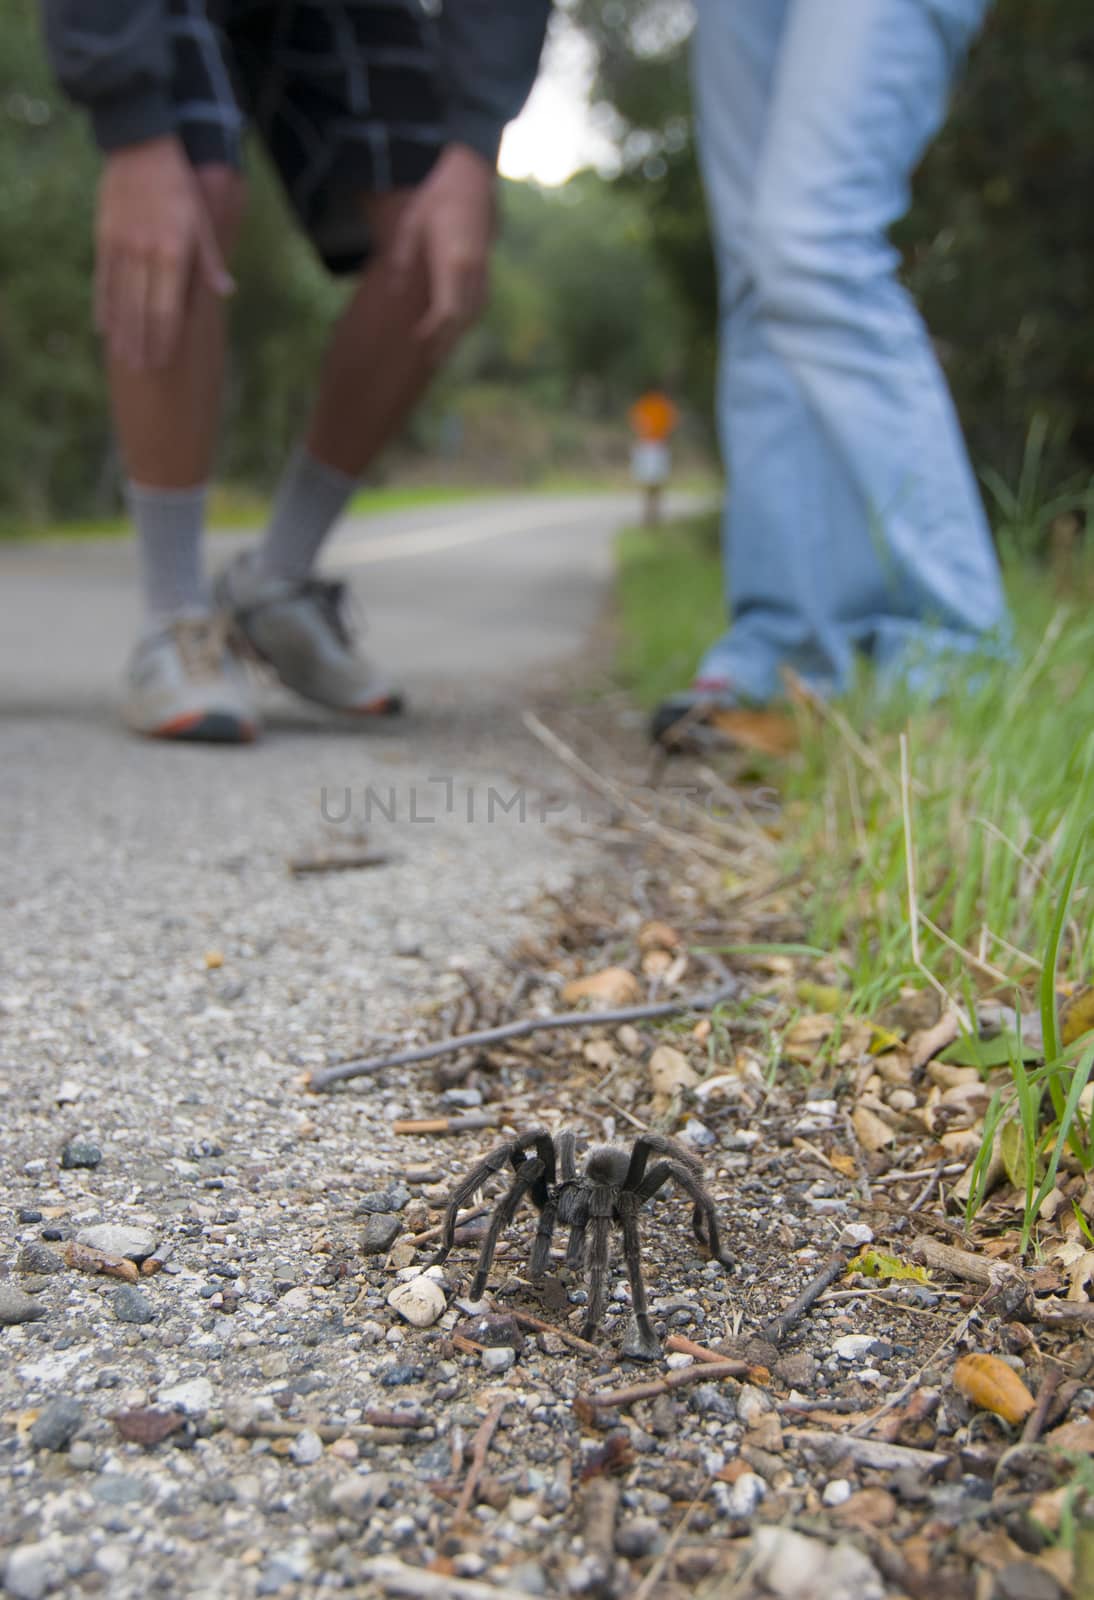 People looking at a wild tarantula seen on roadside in California